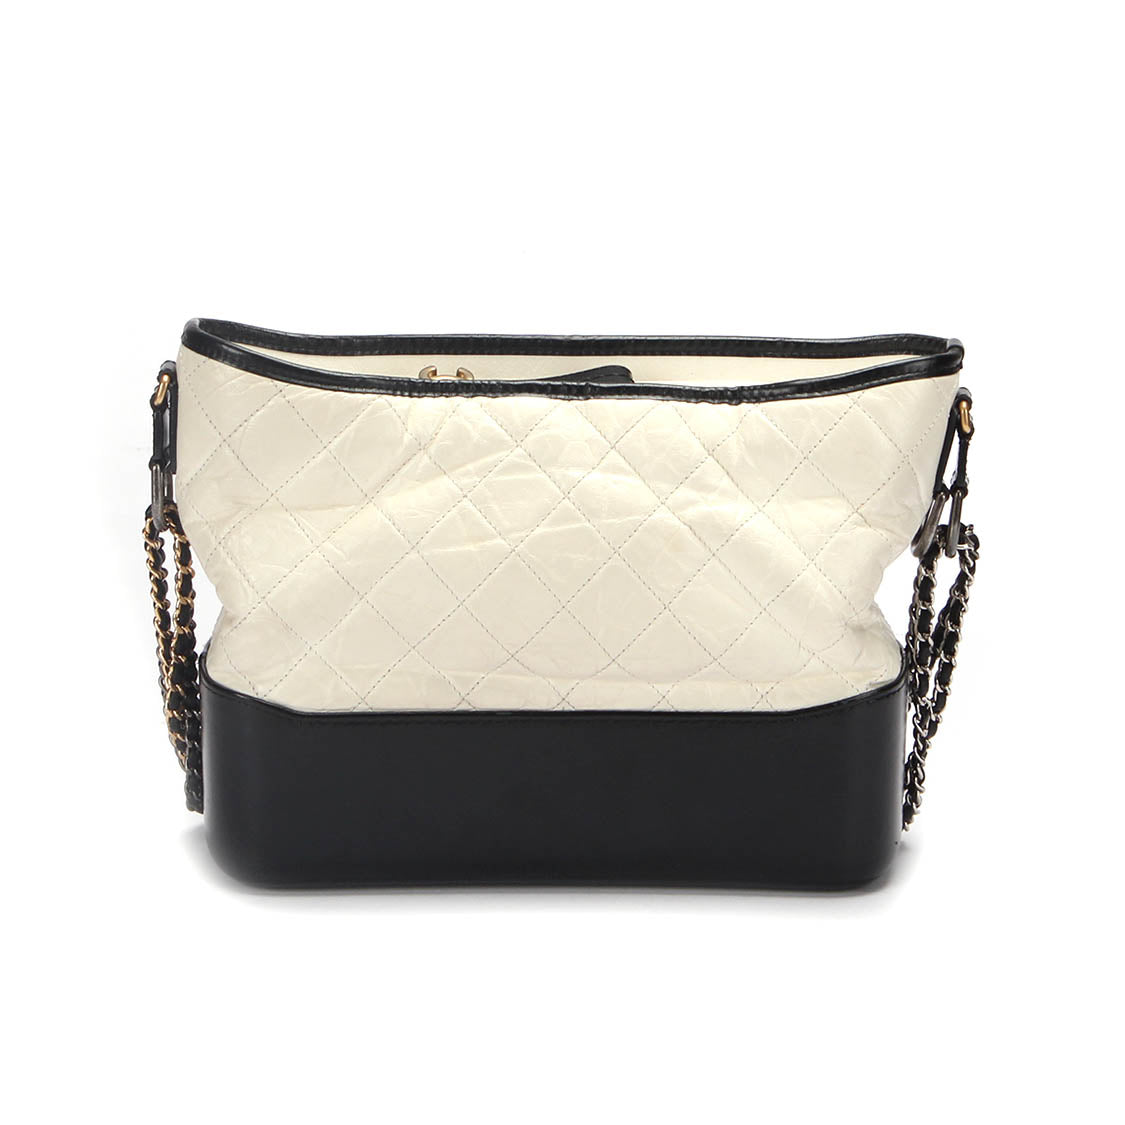 Chanel Medium Gabrielle Shoulder Bag Leather Shoulder Bag in Fair condition